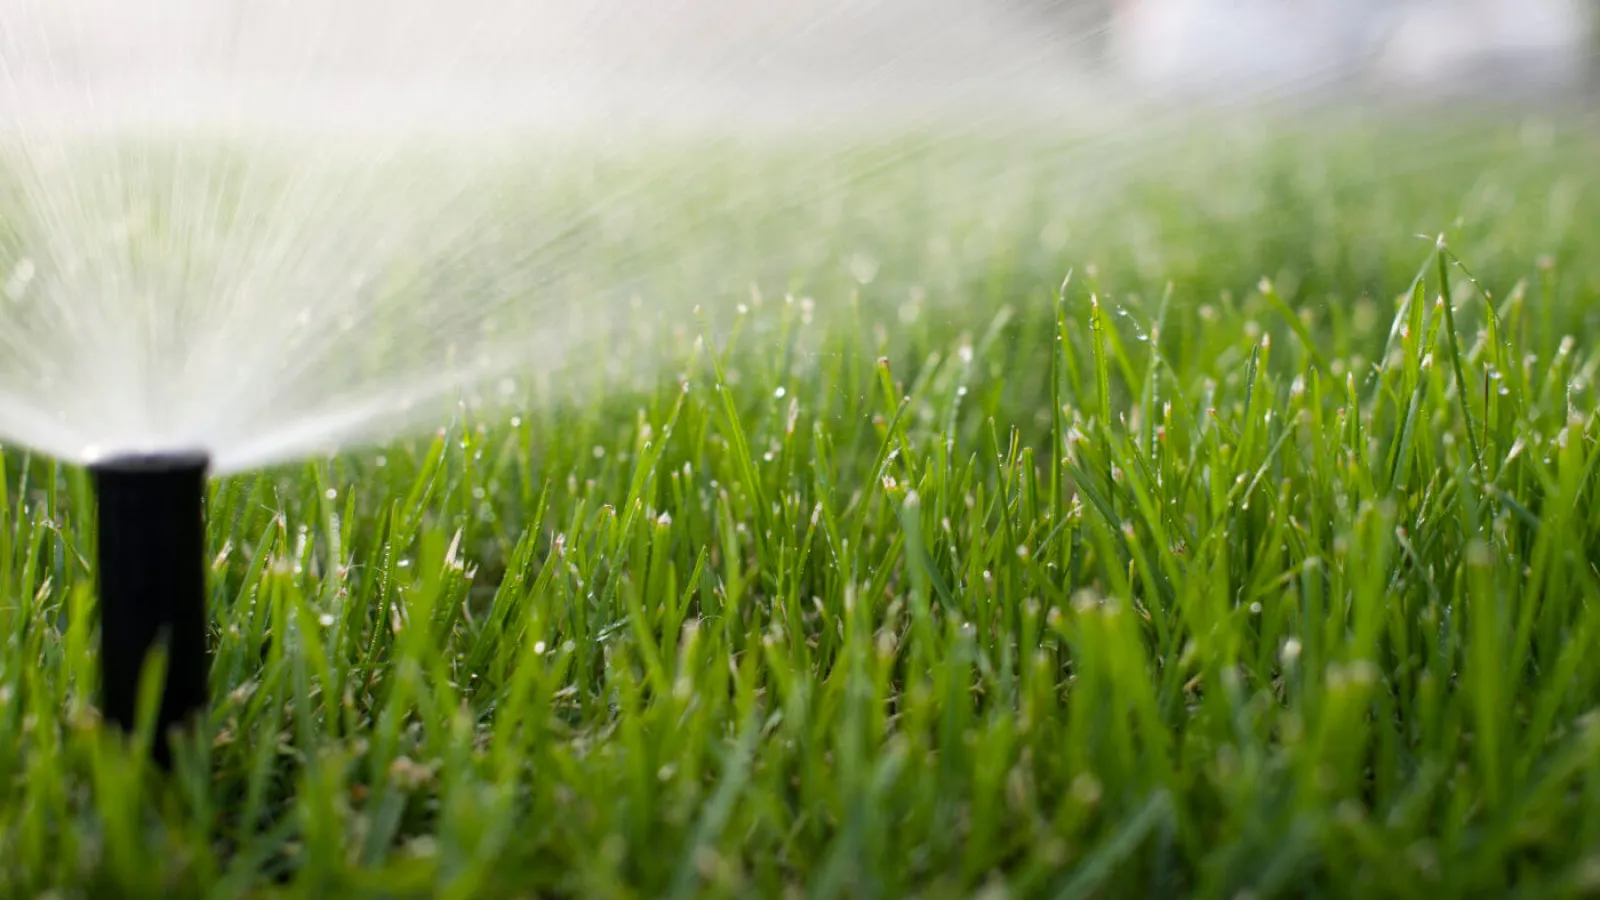 a sprinkler spraying water on grass